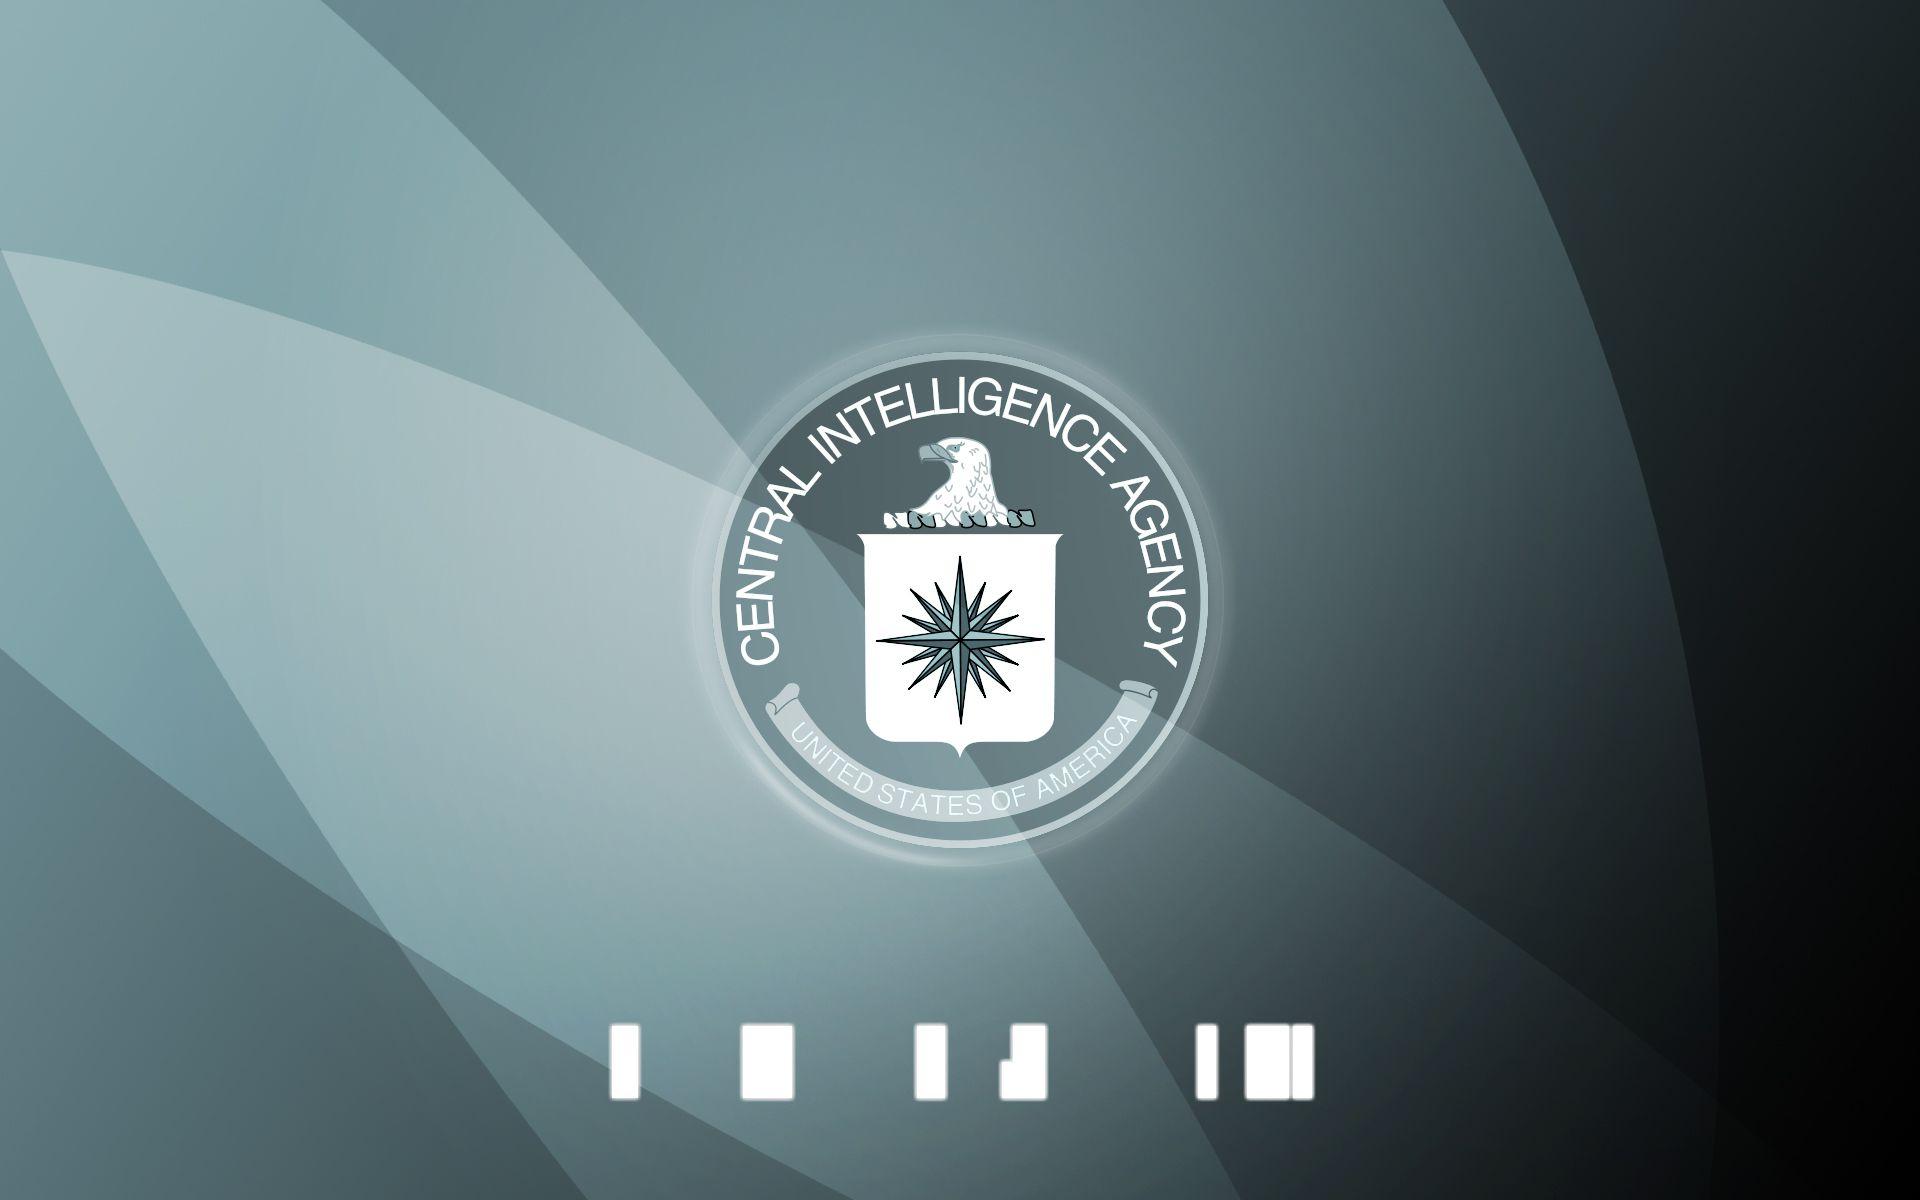 Download the CIA Wallpaper, CIA iPhone Wallpaper, CIA Android